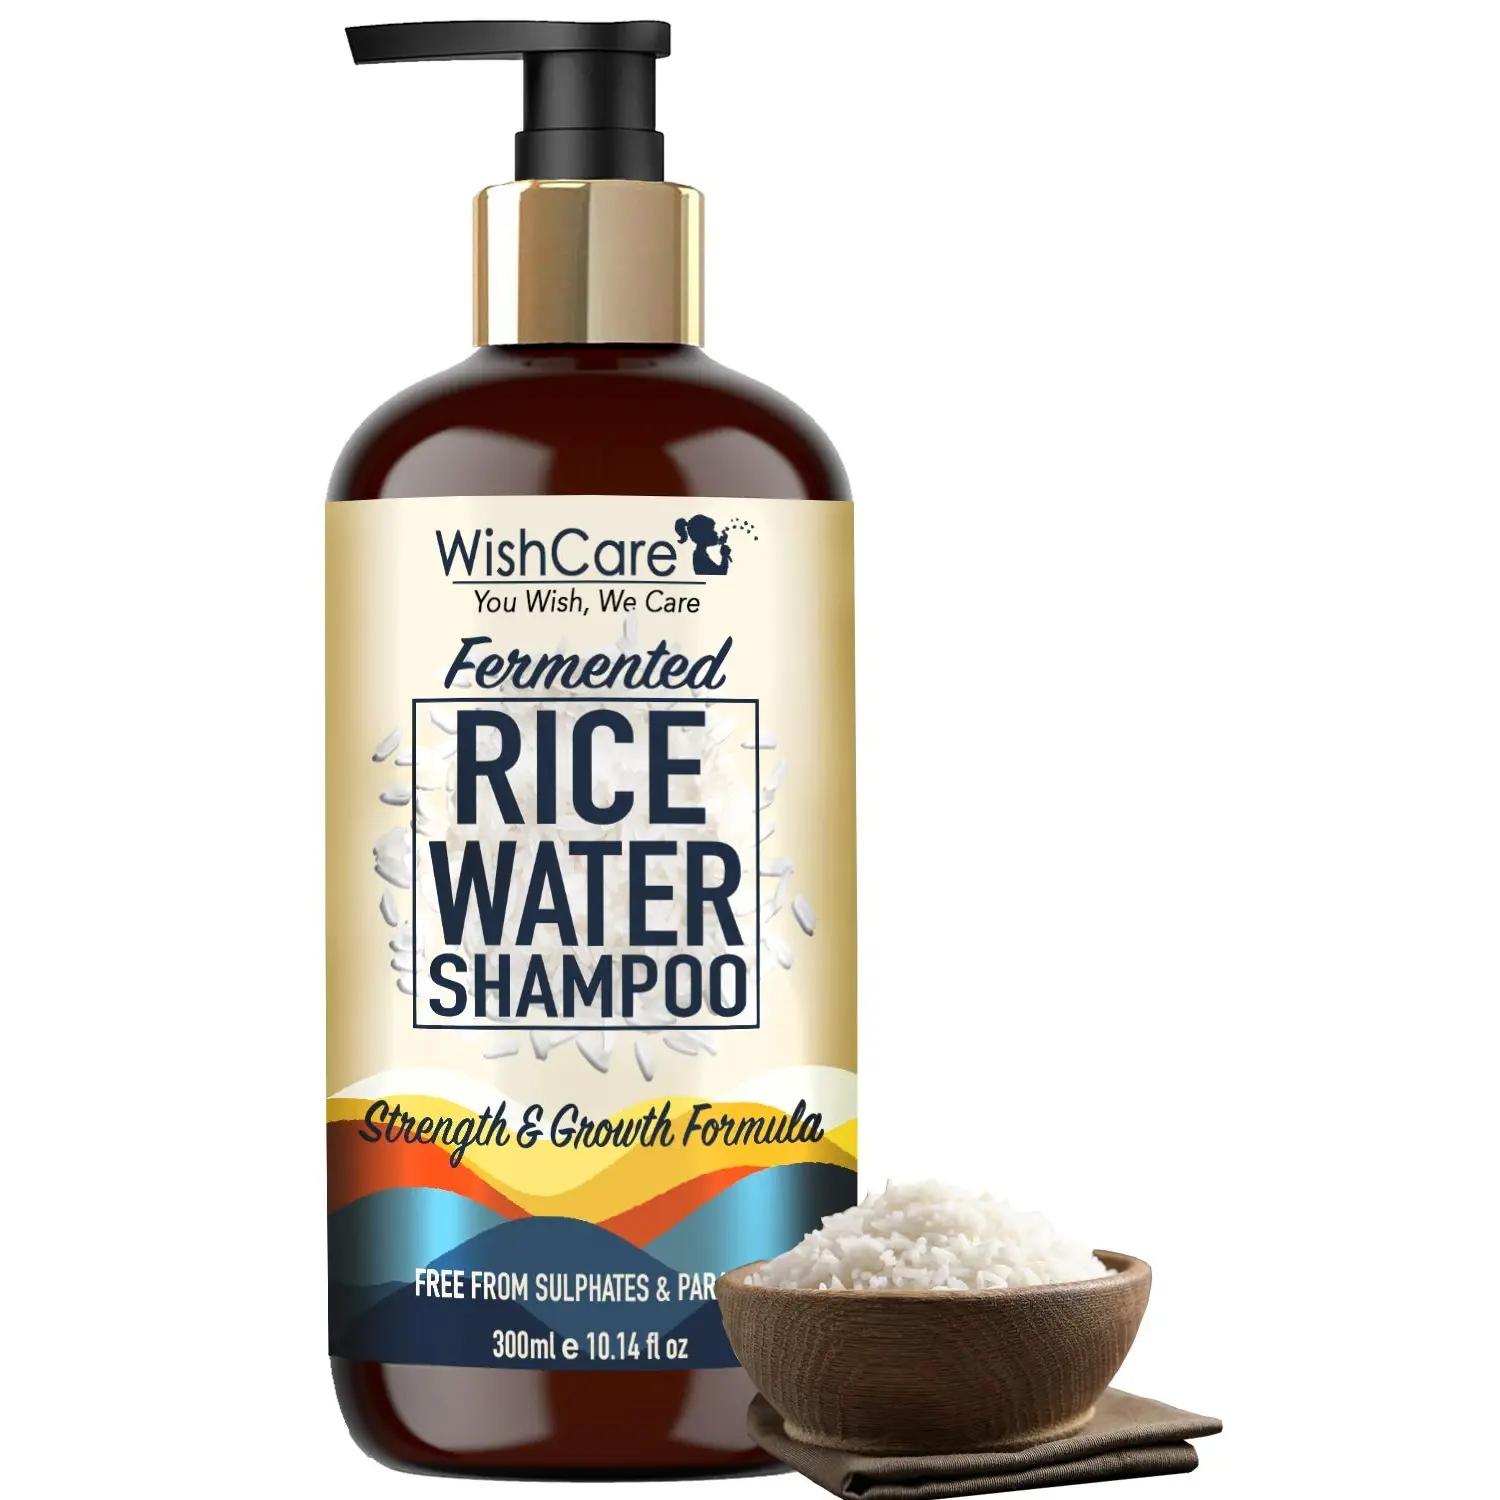 wishcare fermented rice water shampoo (300ml)